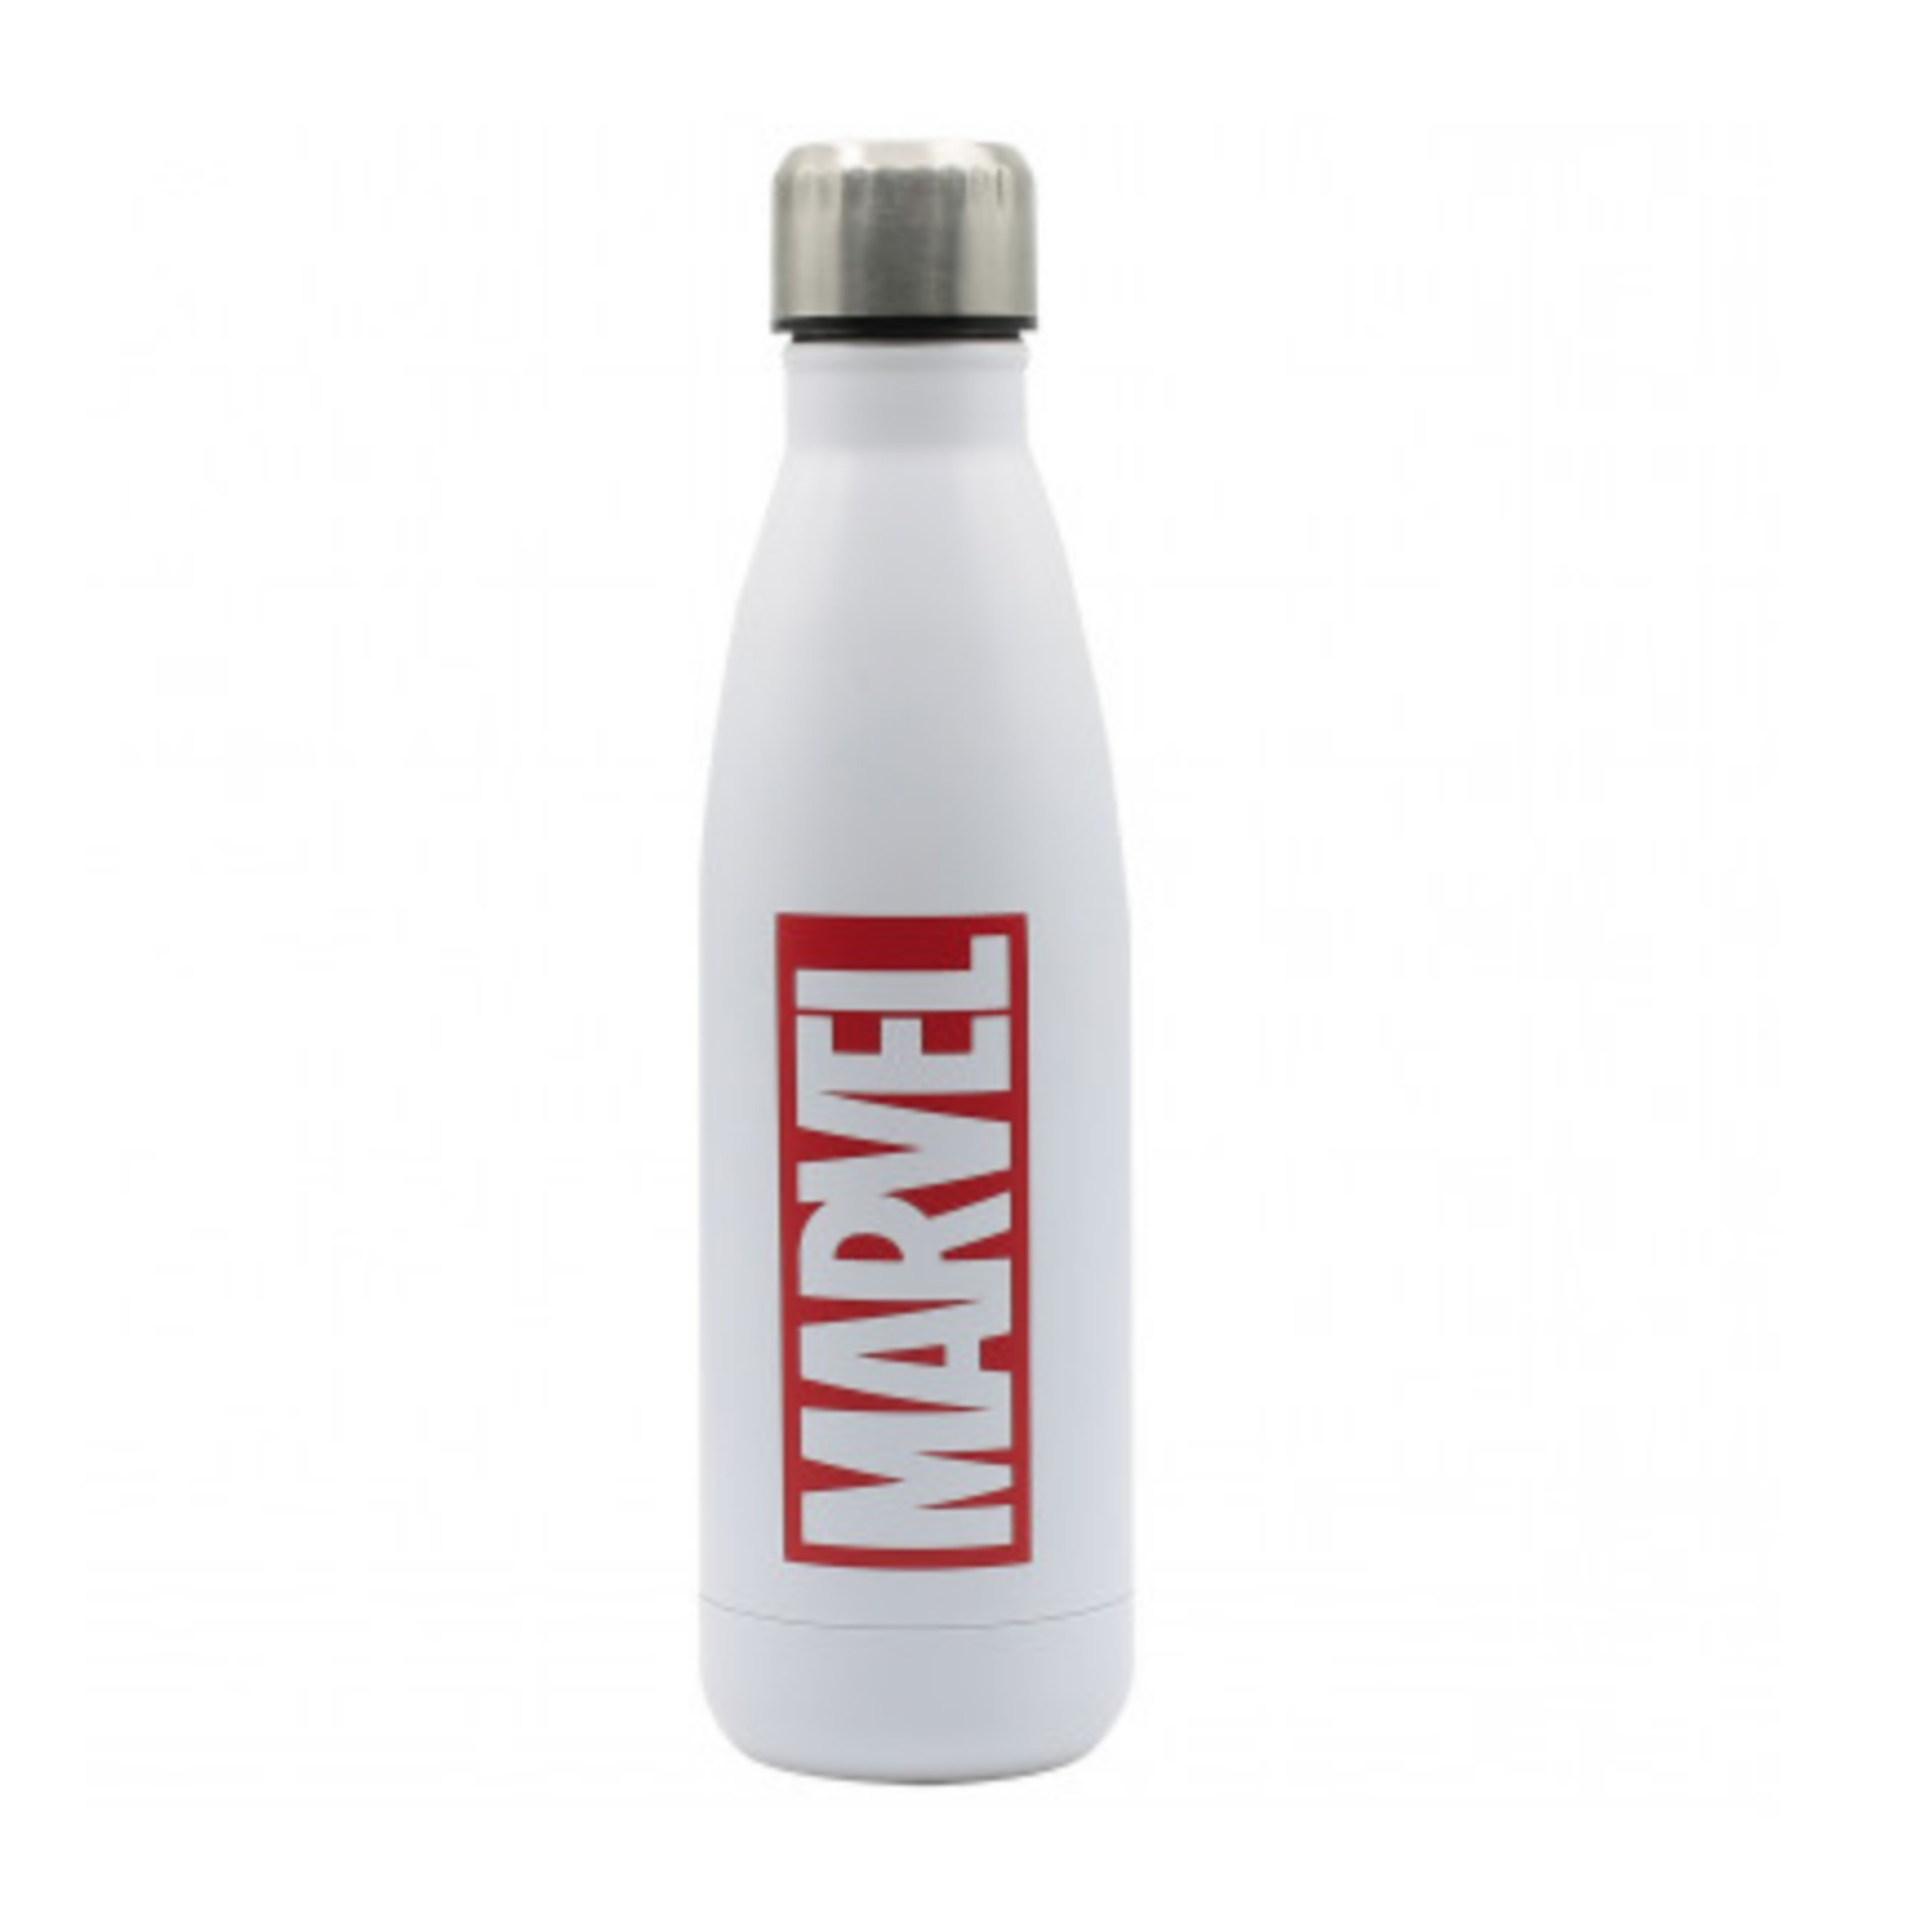 Puro Marvel Botella De Acero Inoxidable 500ml - Blanco/Rojo  MKP